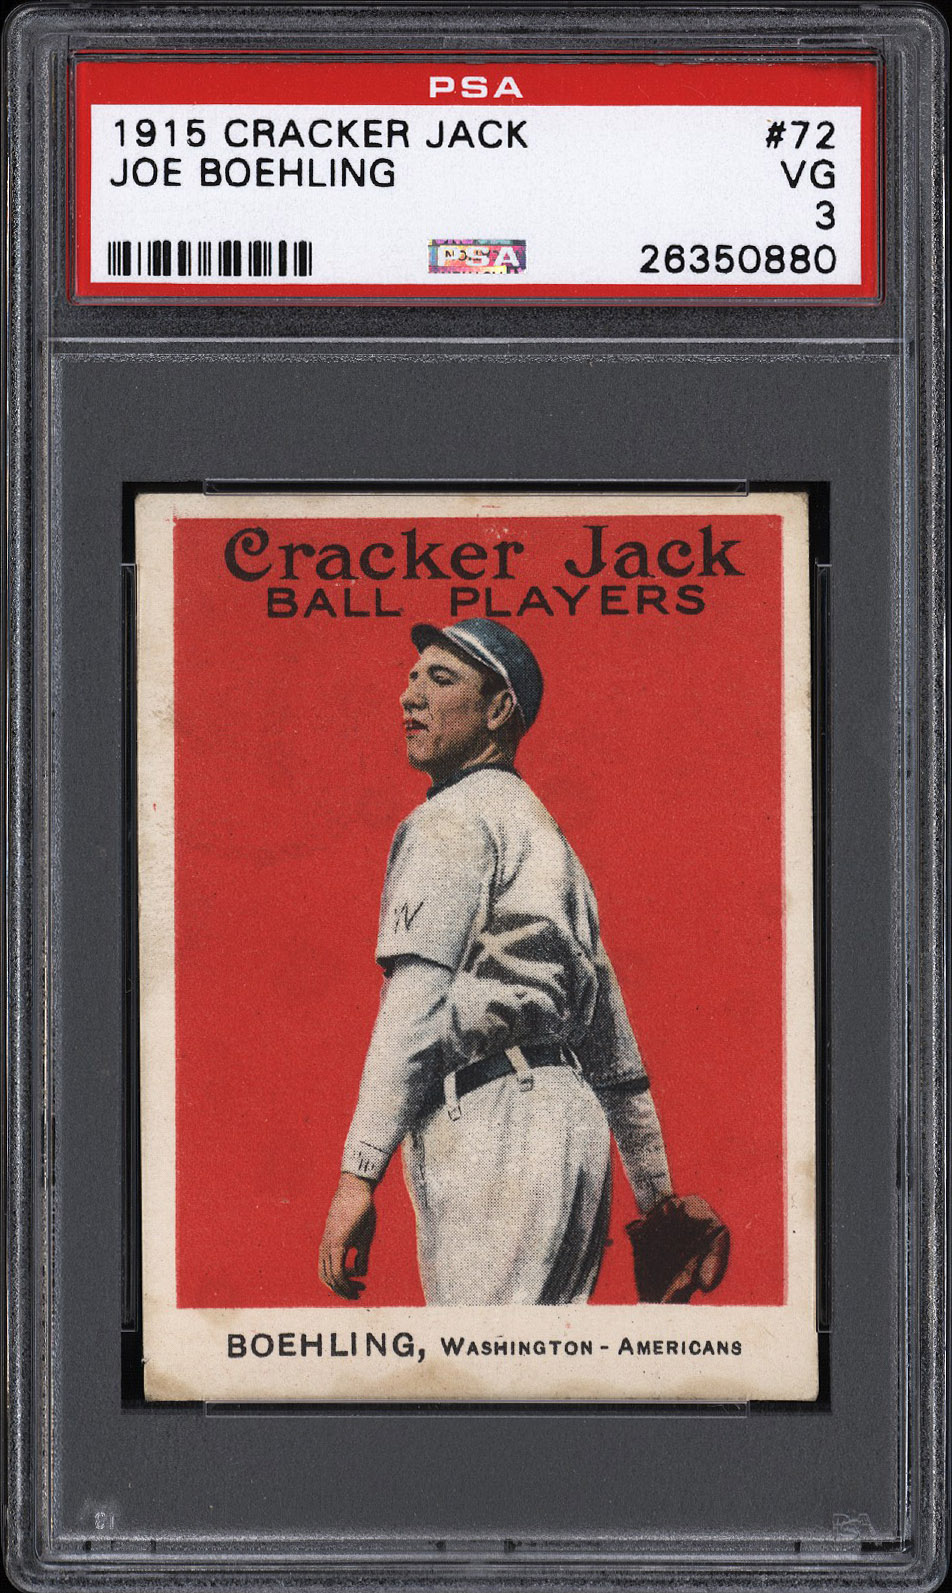  1915 Cracker Jack #72 Joe Boehling - PSA VG 3